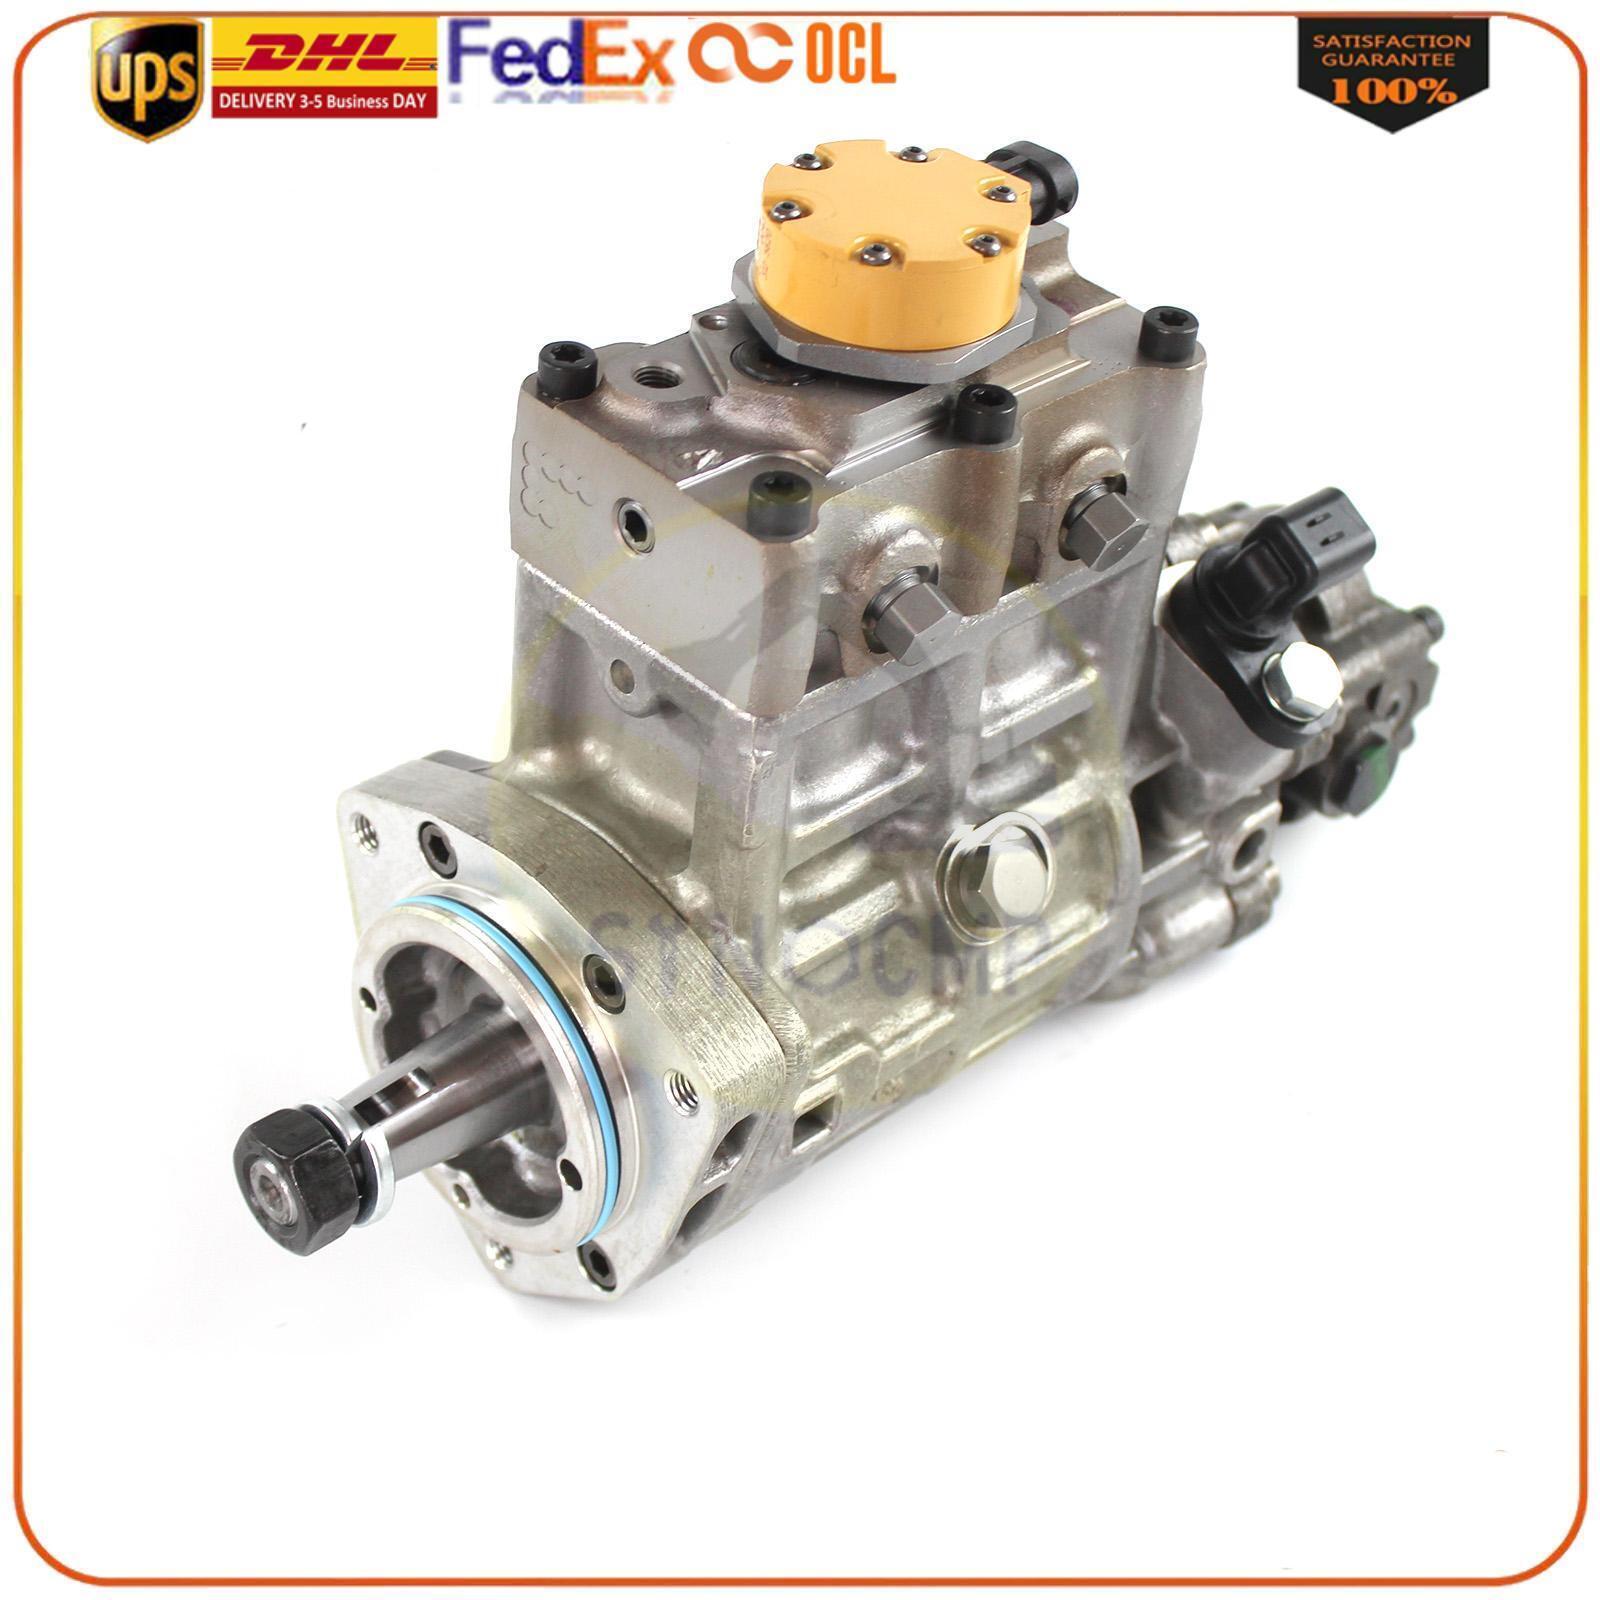 C6.4 Fuel Injection Pump 320-2512/326-4635/295-9126/32F61-10302 For Cat 320D